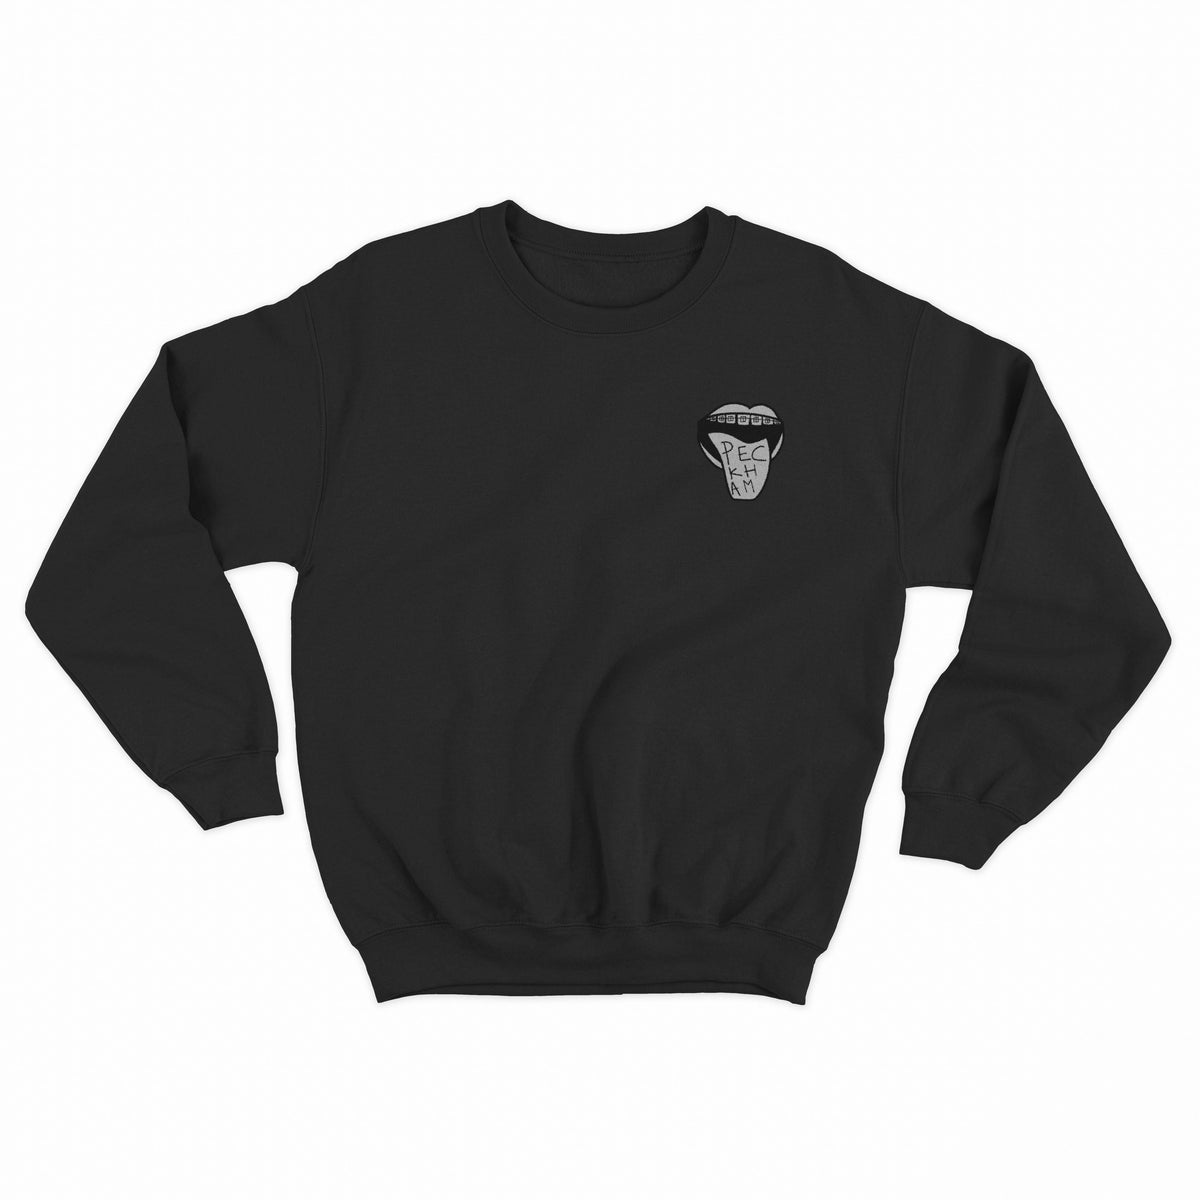 Peckham Mouth Kids Sweatshirt - Black